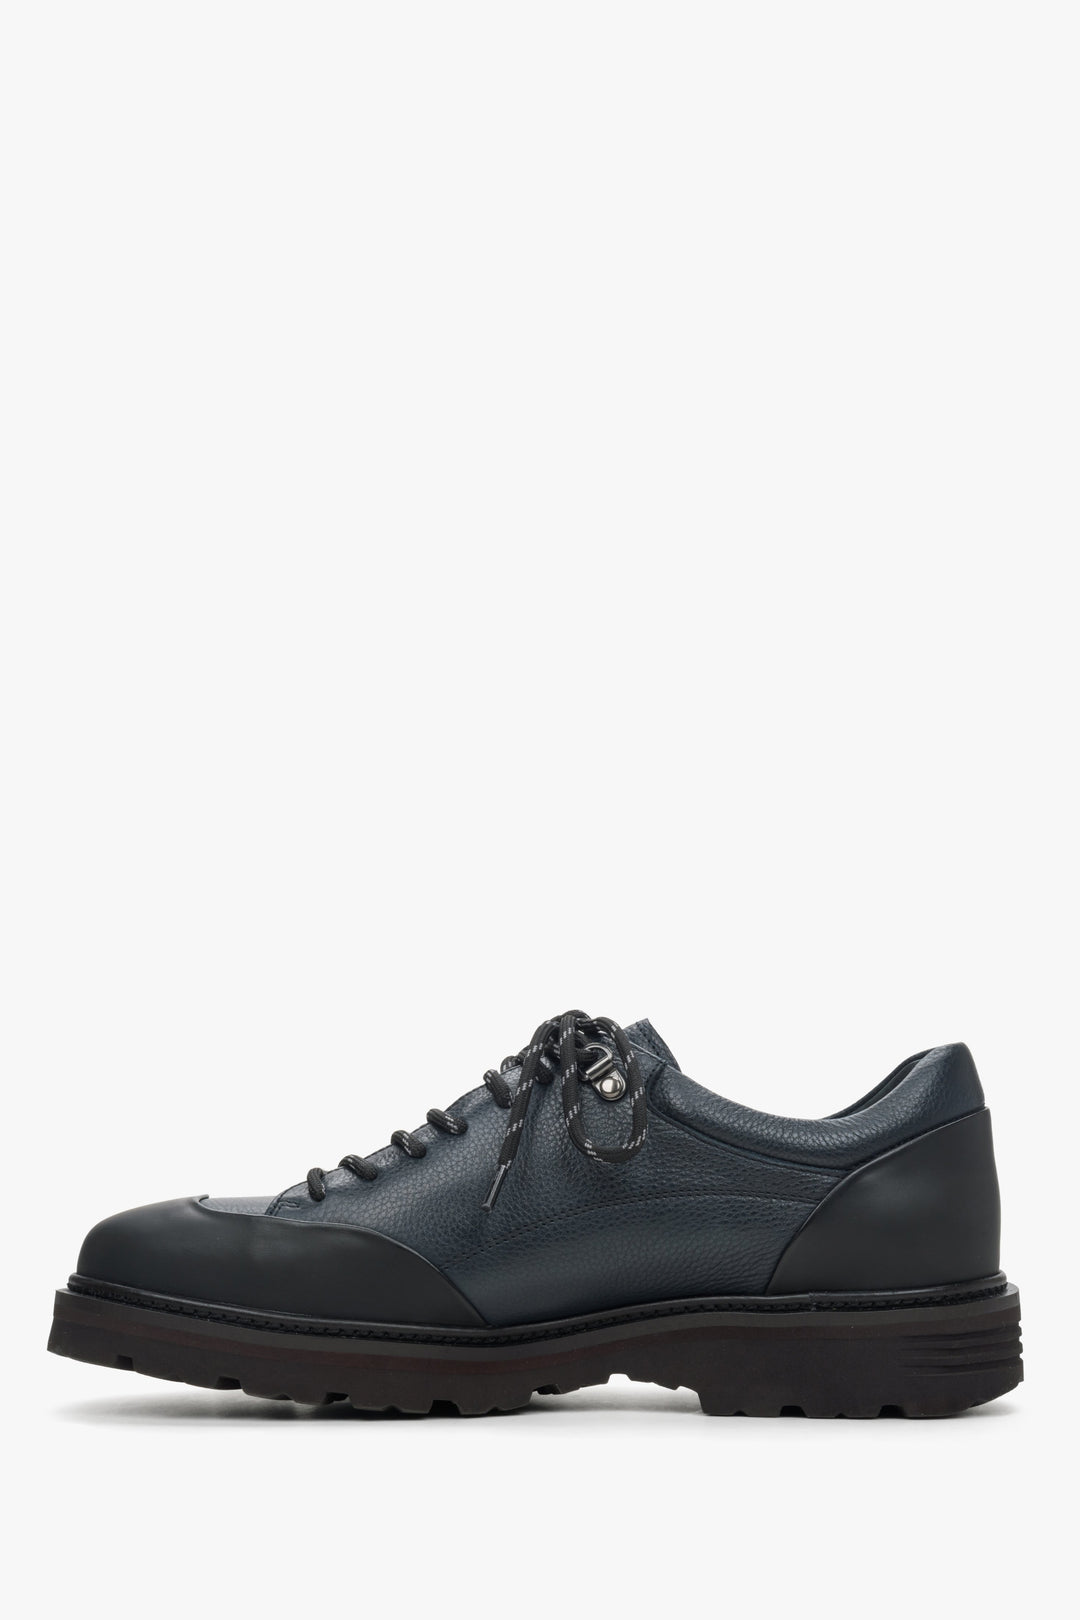 Dark blue comfortable leather men's loafers by Estro - shoe profile.